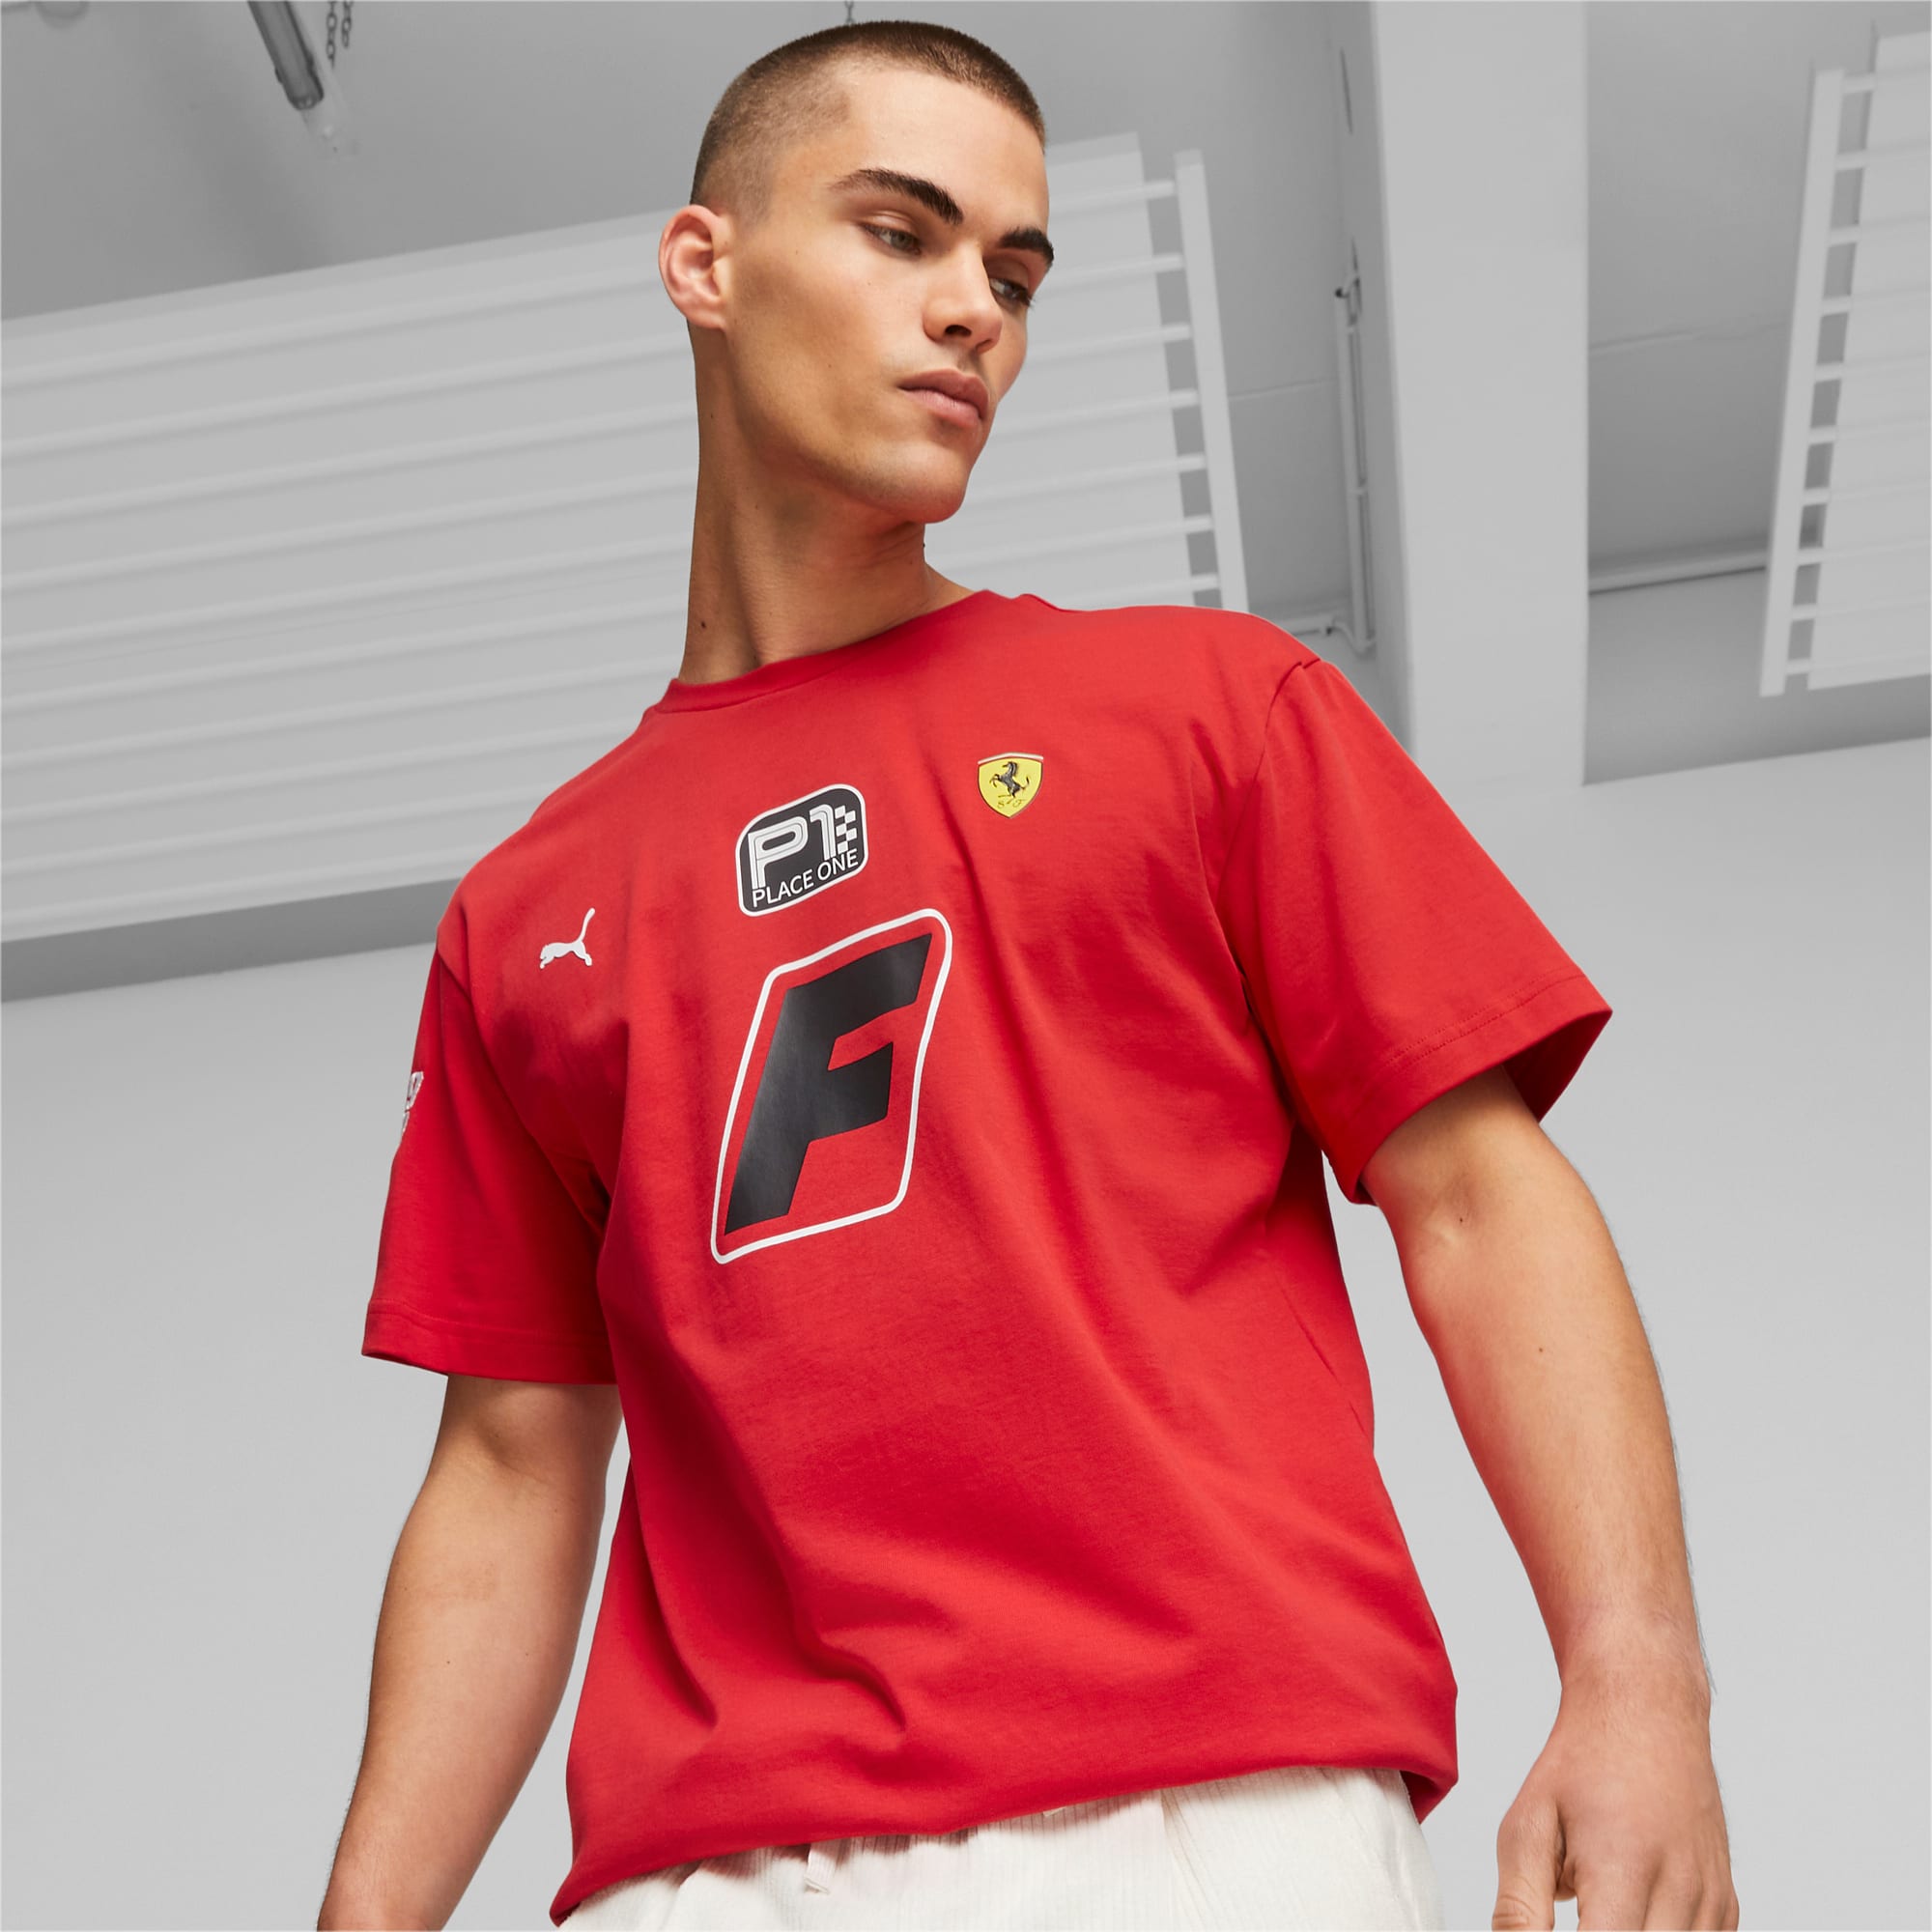 Comprar Camiseta Scuderia Ferrari Race. Disponible en rojo